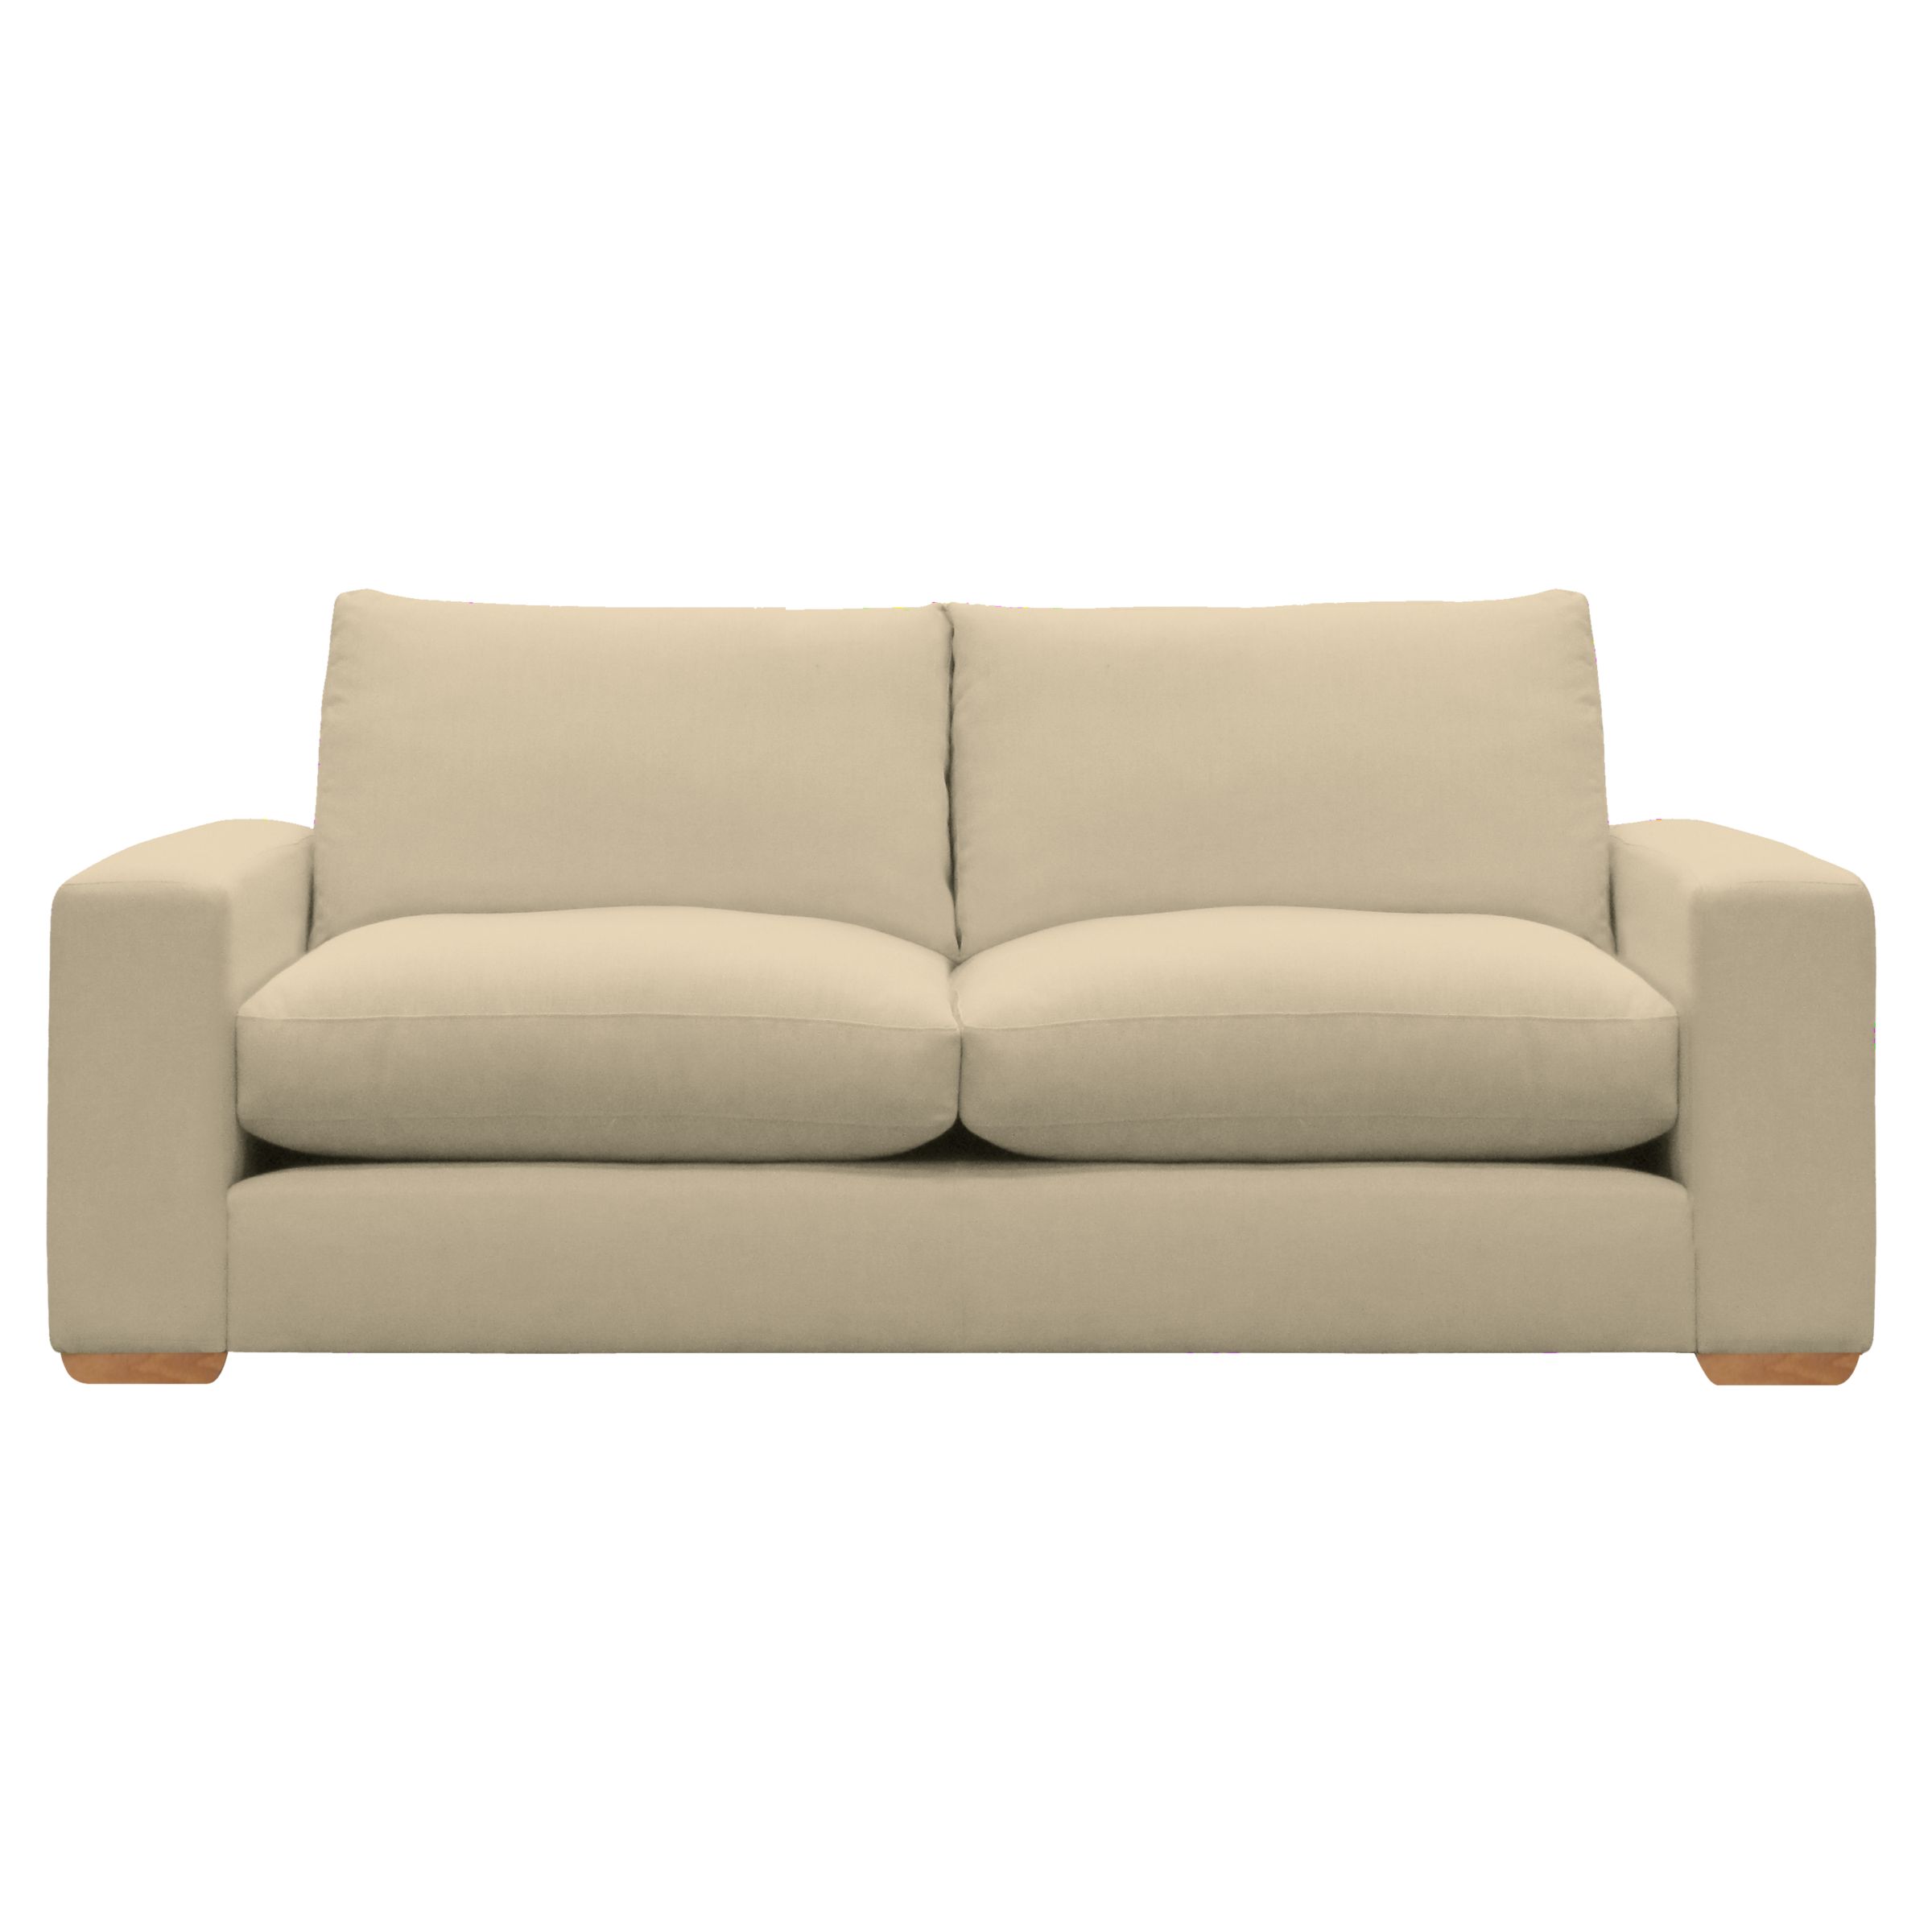 John Lewis Options Wide Arm Large Sofa, Eaton Taupe, width 200cm